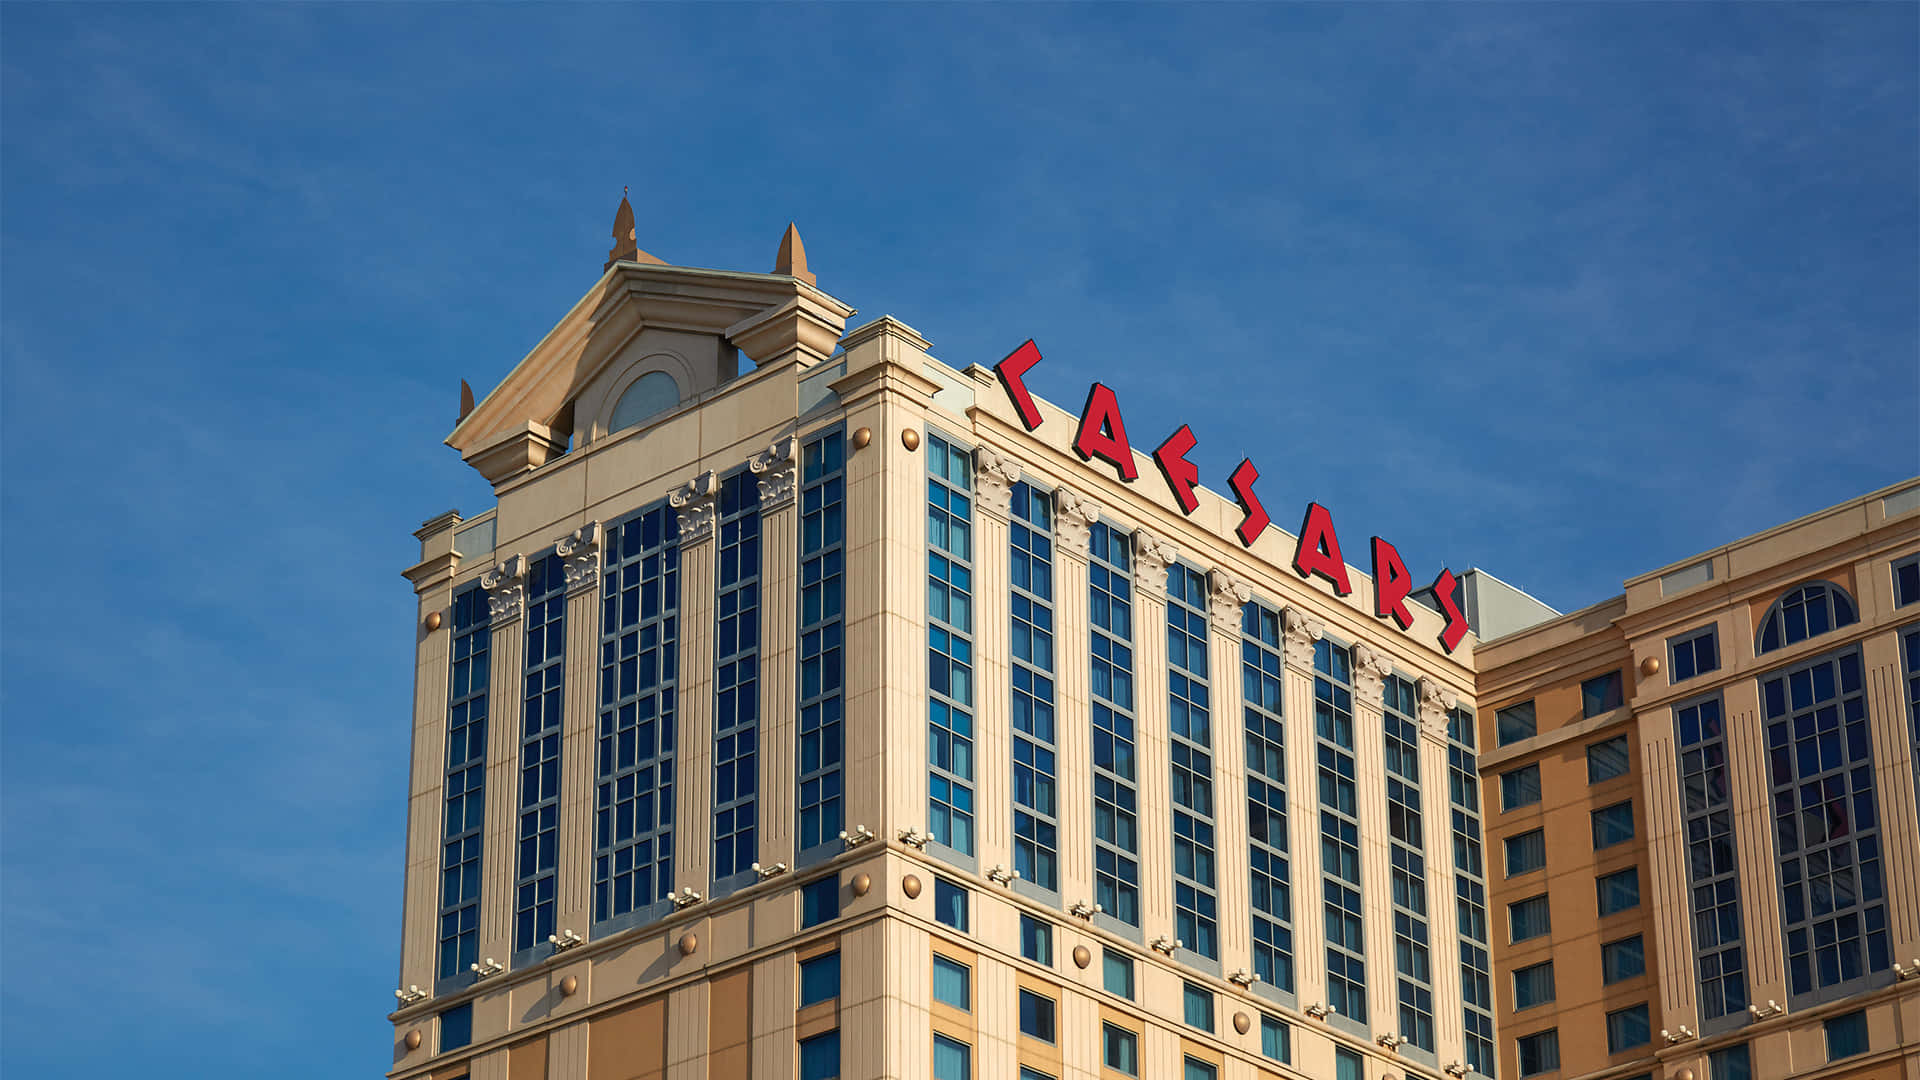 Imagendel Hotel Y Casino Caesars De Atlantic City